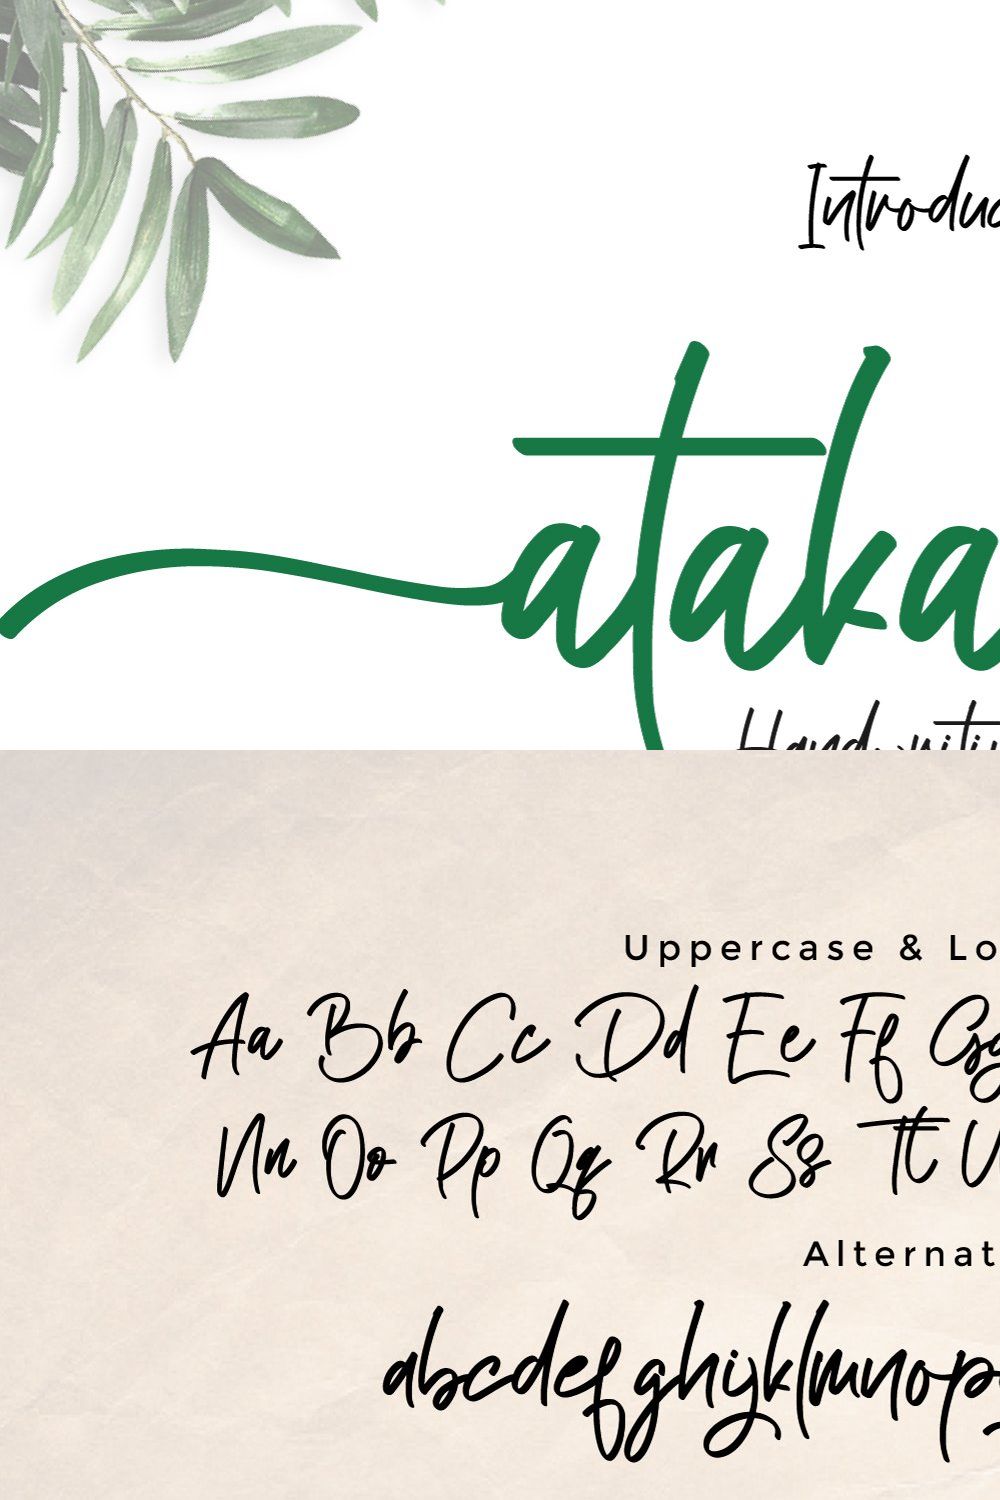 Atakana - Handwriting Script Font pinterest preview image.